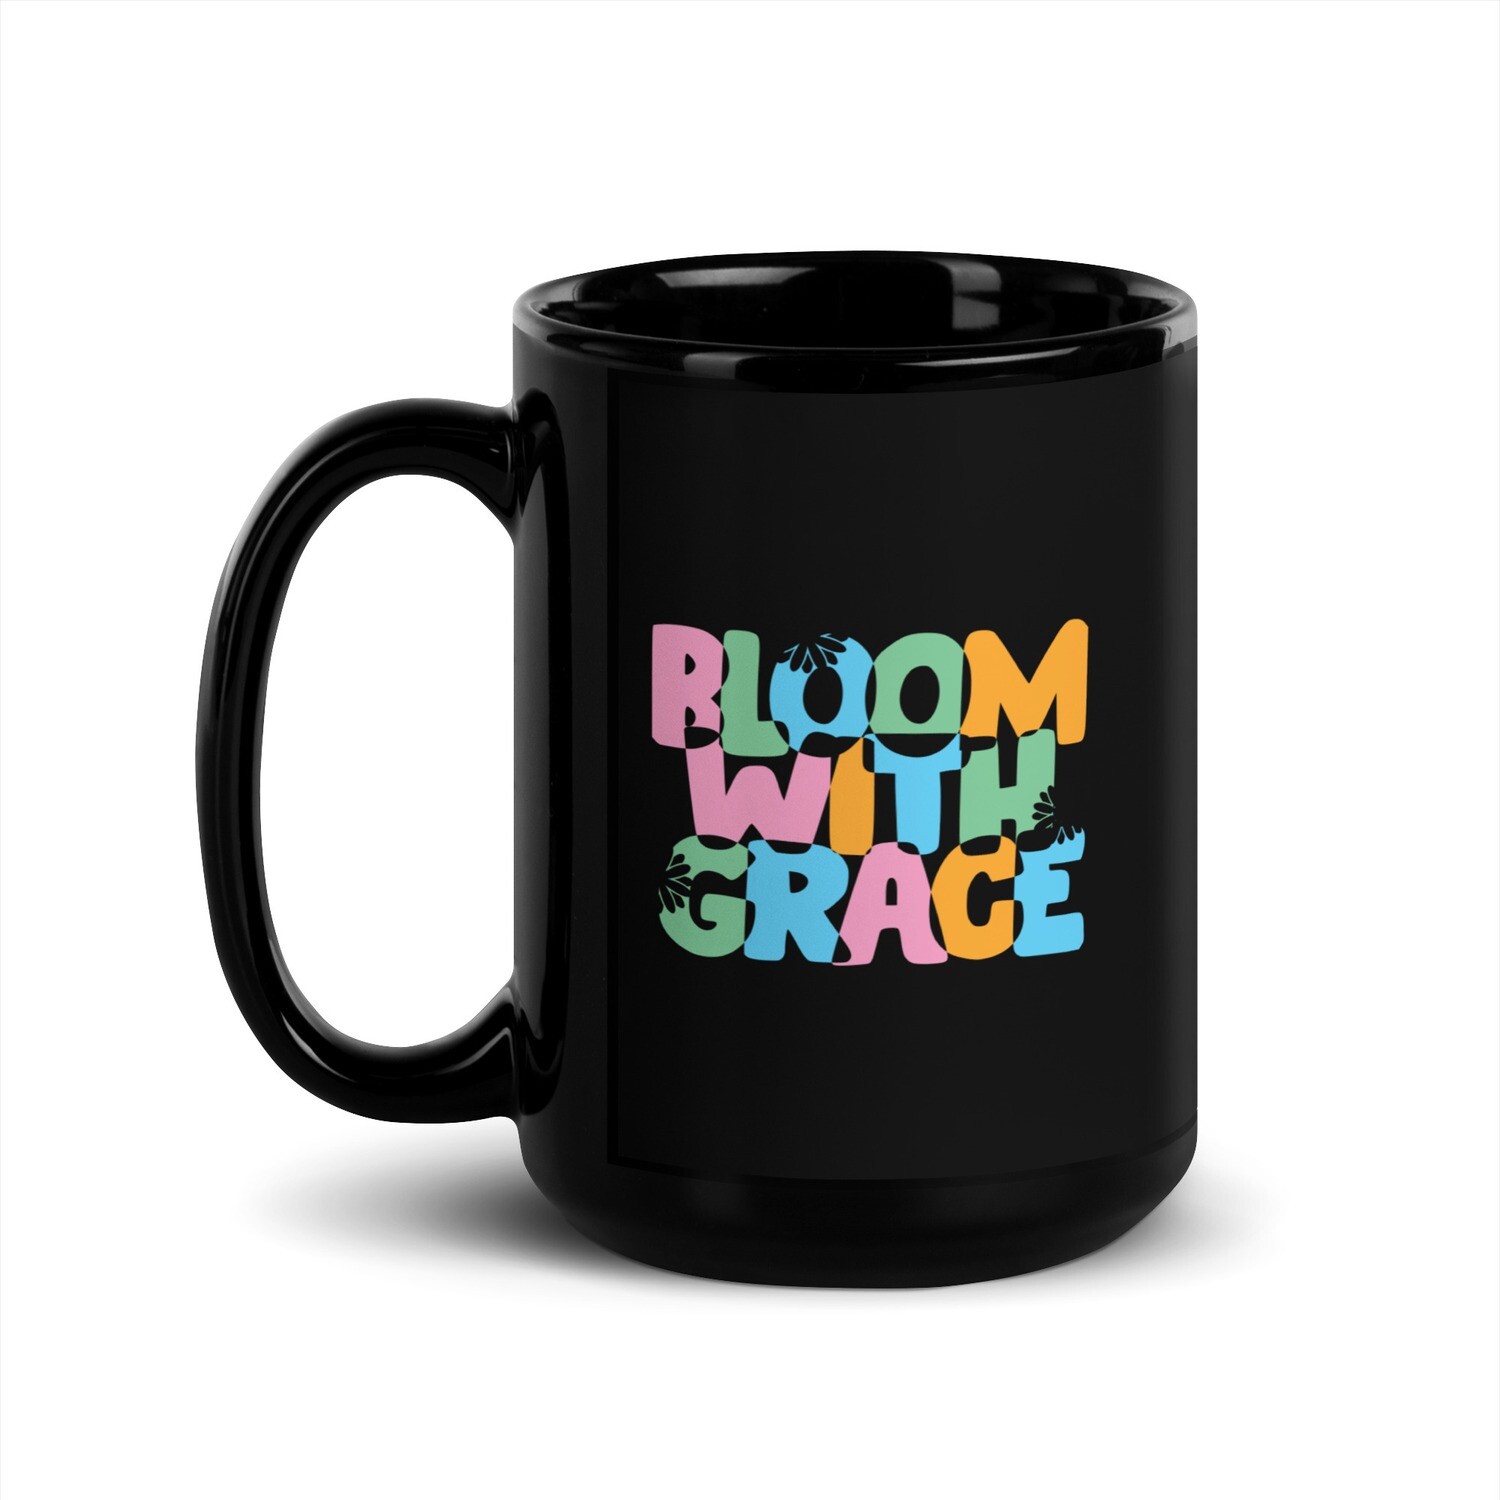 Bloom With Grace Black Glossy Mug